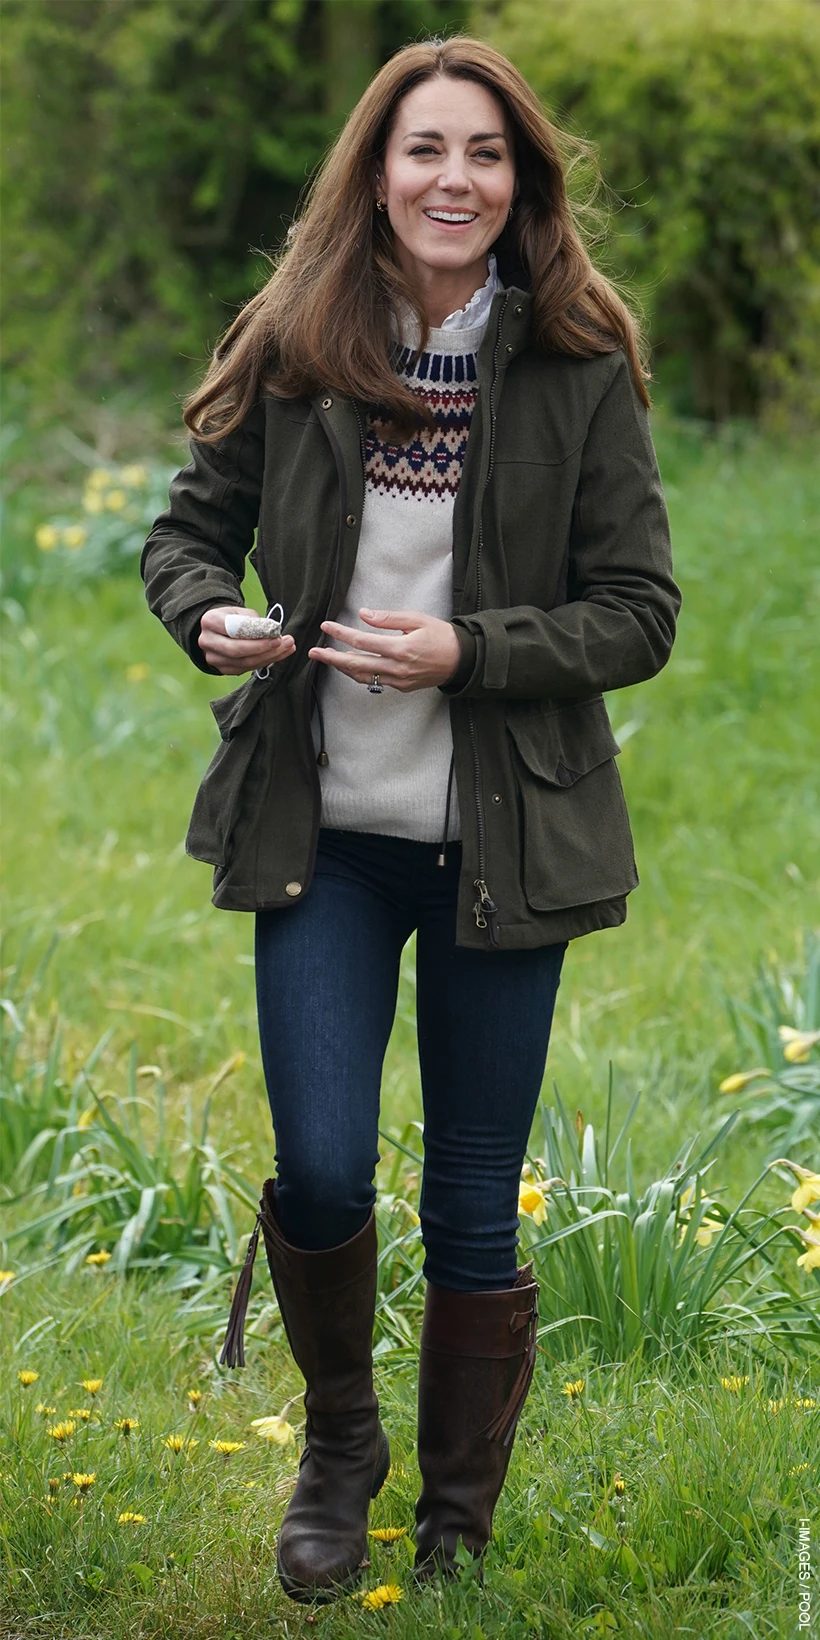 Kate Middleton wearing the Brora sweater during a farm visit.